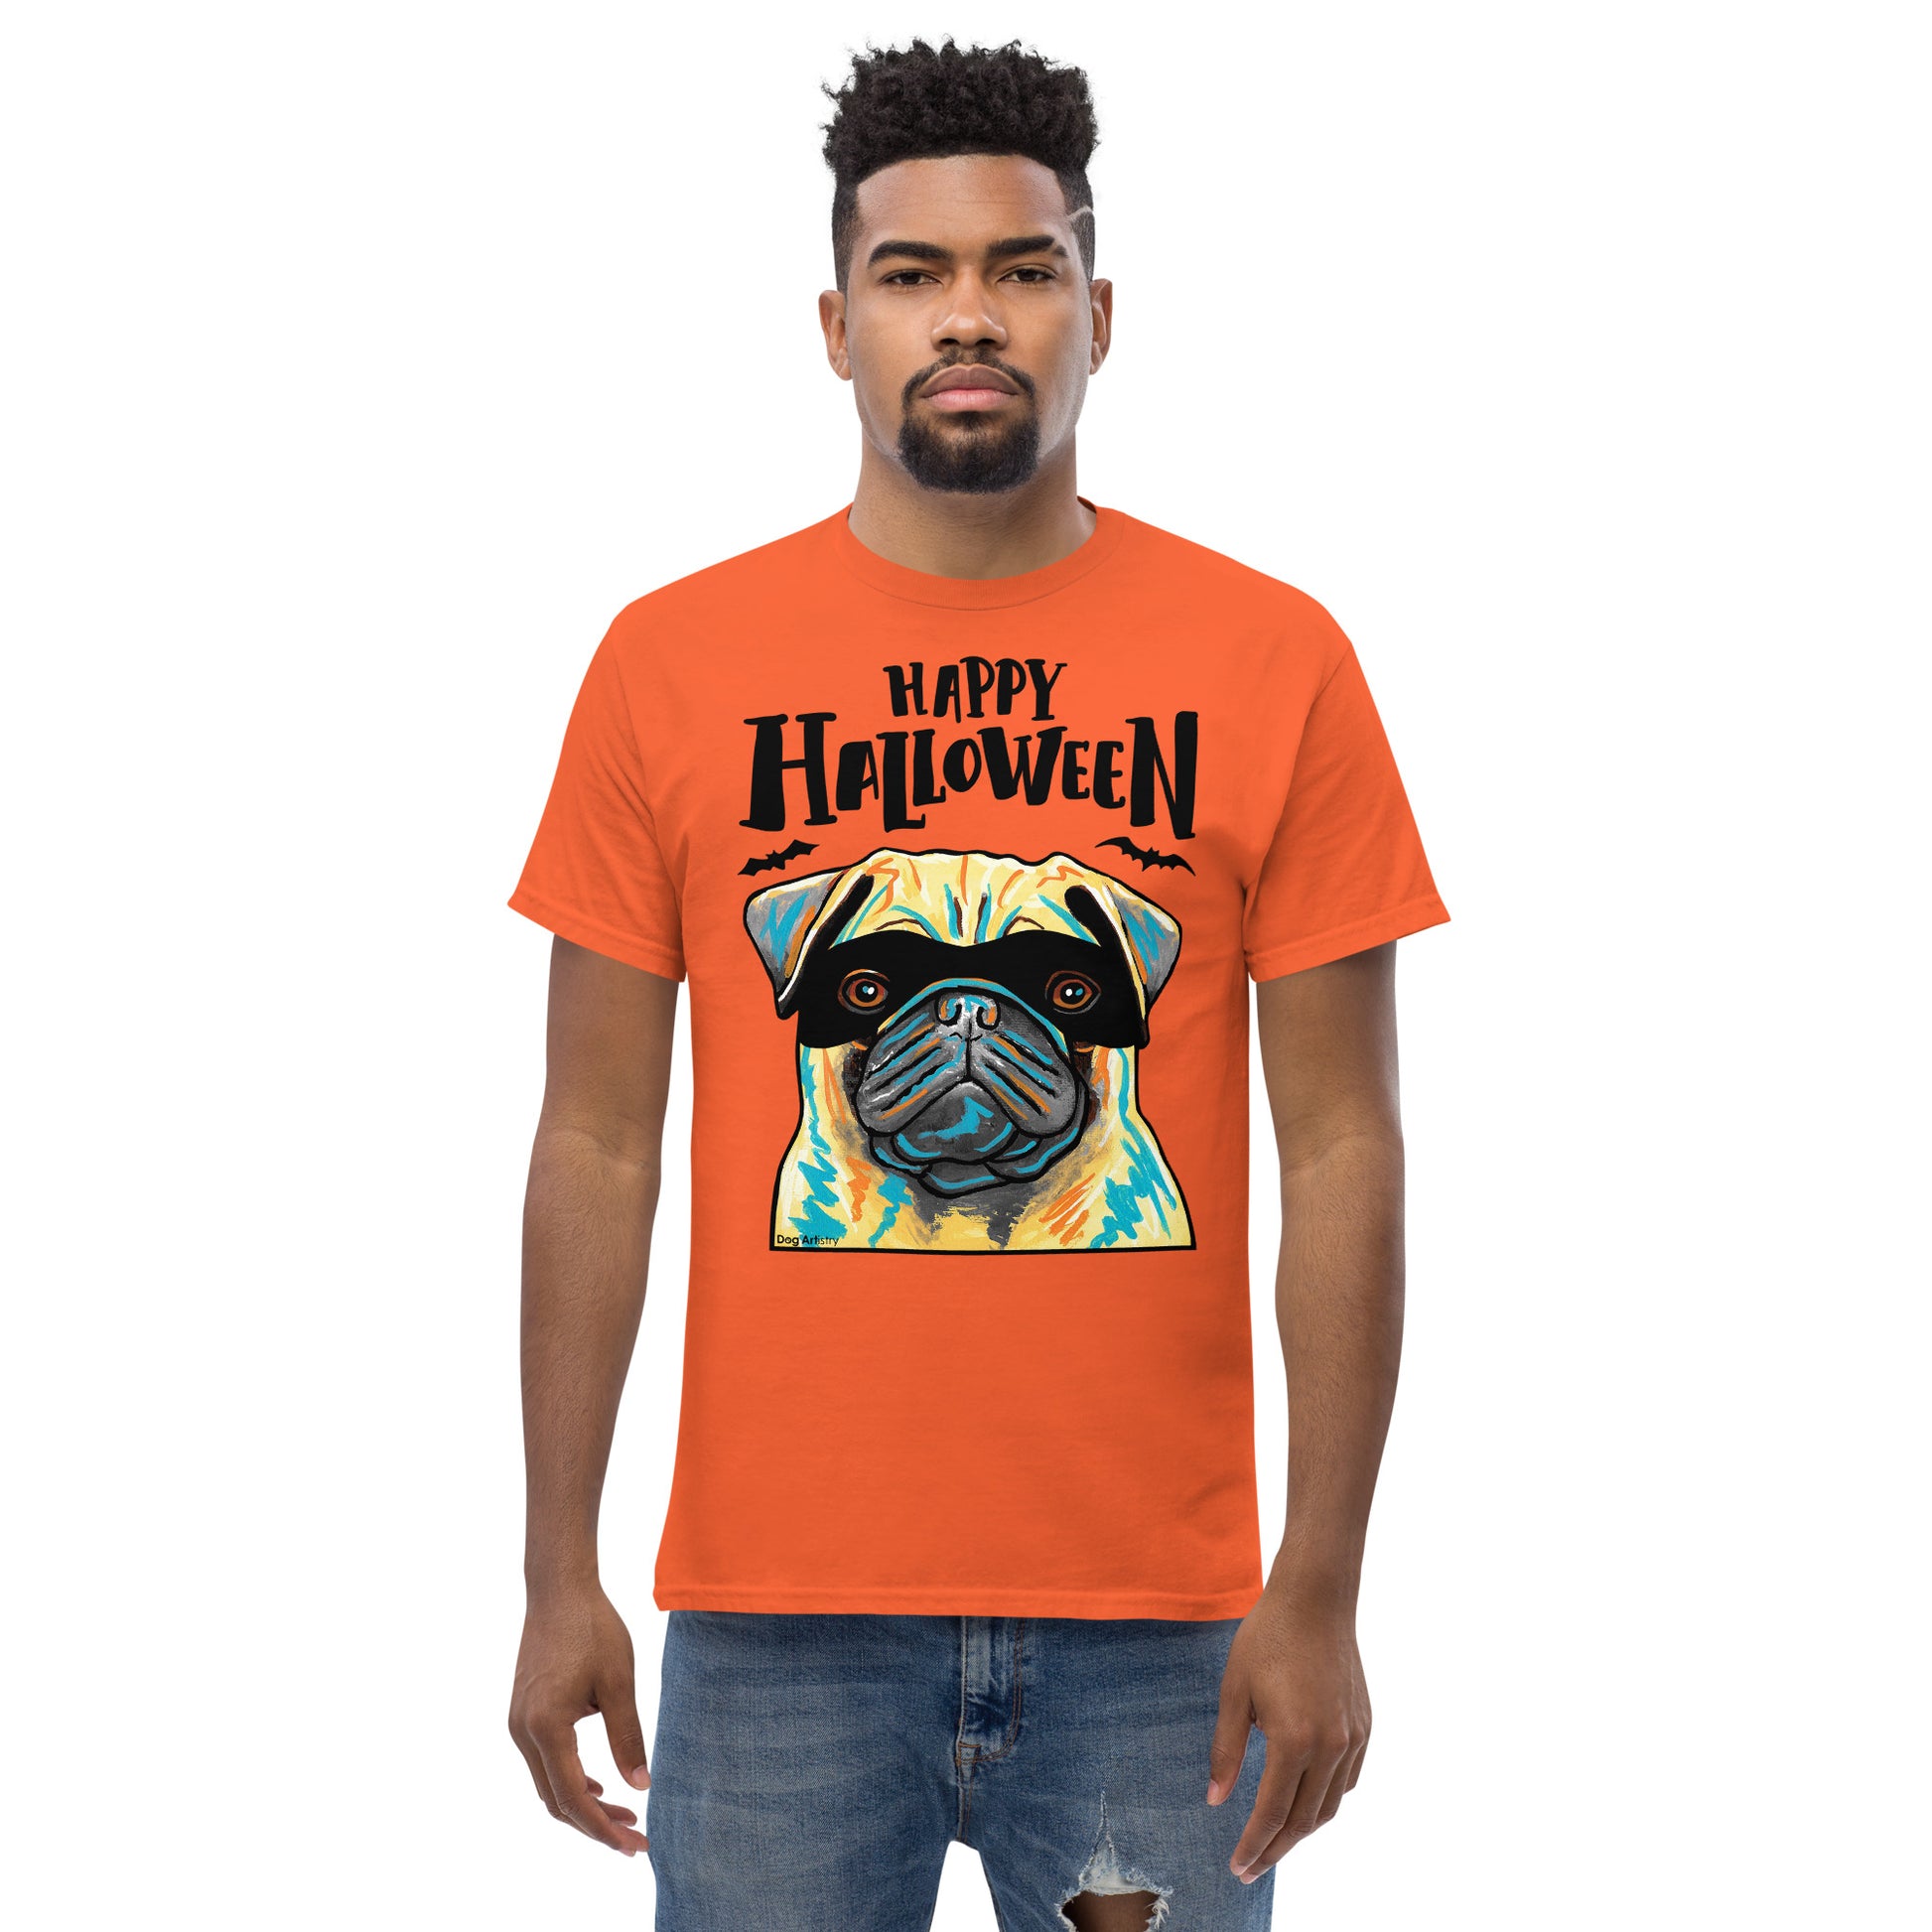 Funny Happy Halloween Pug wearing mask men’s orange t-shirt by Dog Artistry.